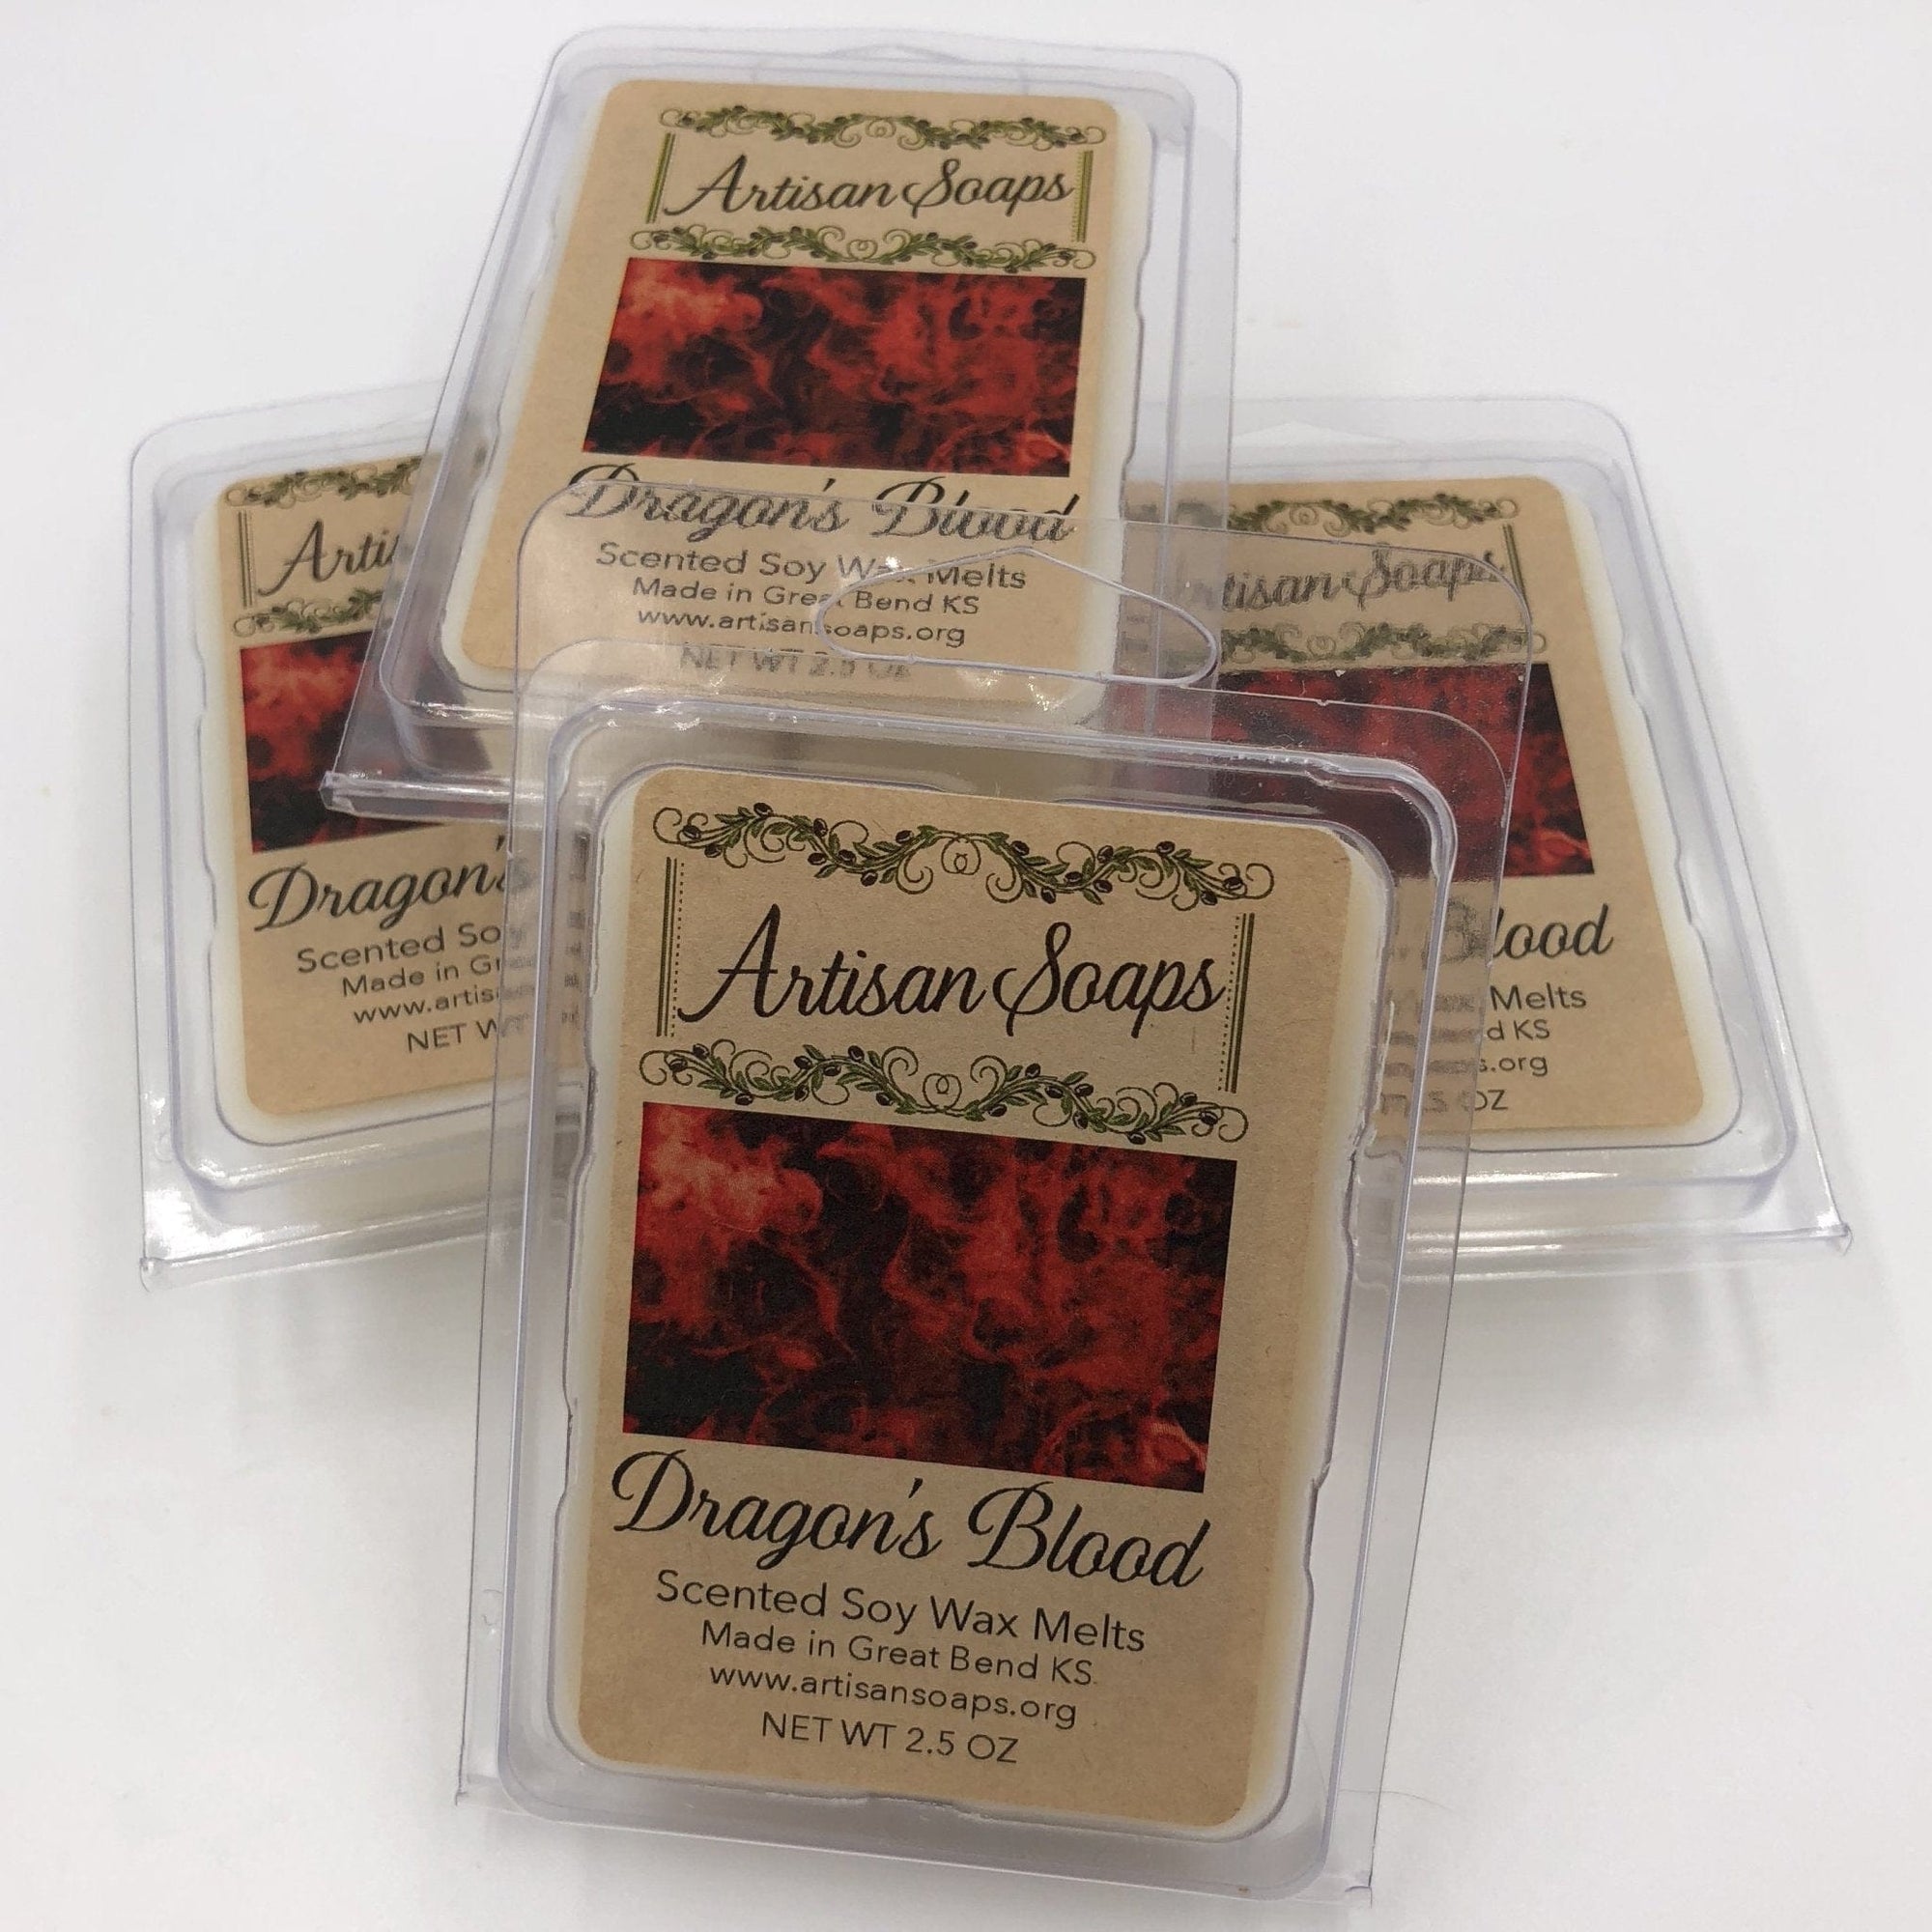 Dragon's Blood Soy Wax Melt - Artisan Soaps